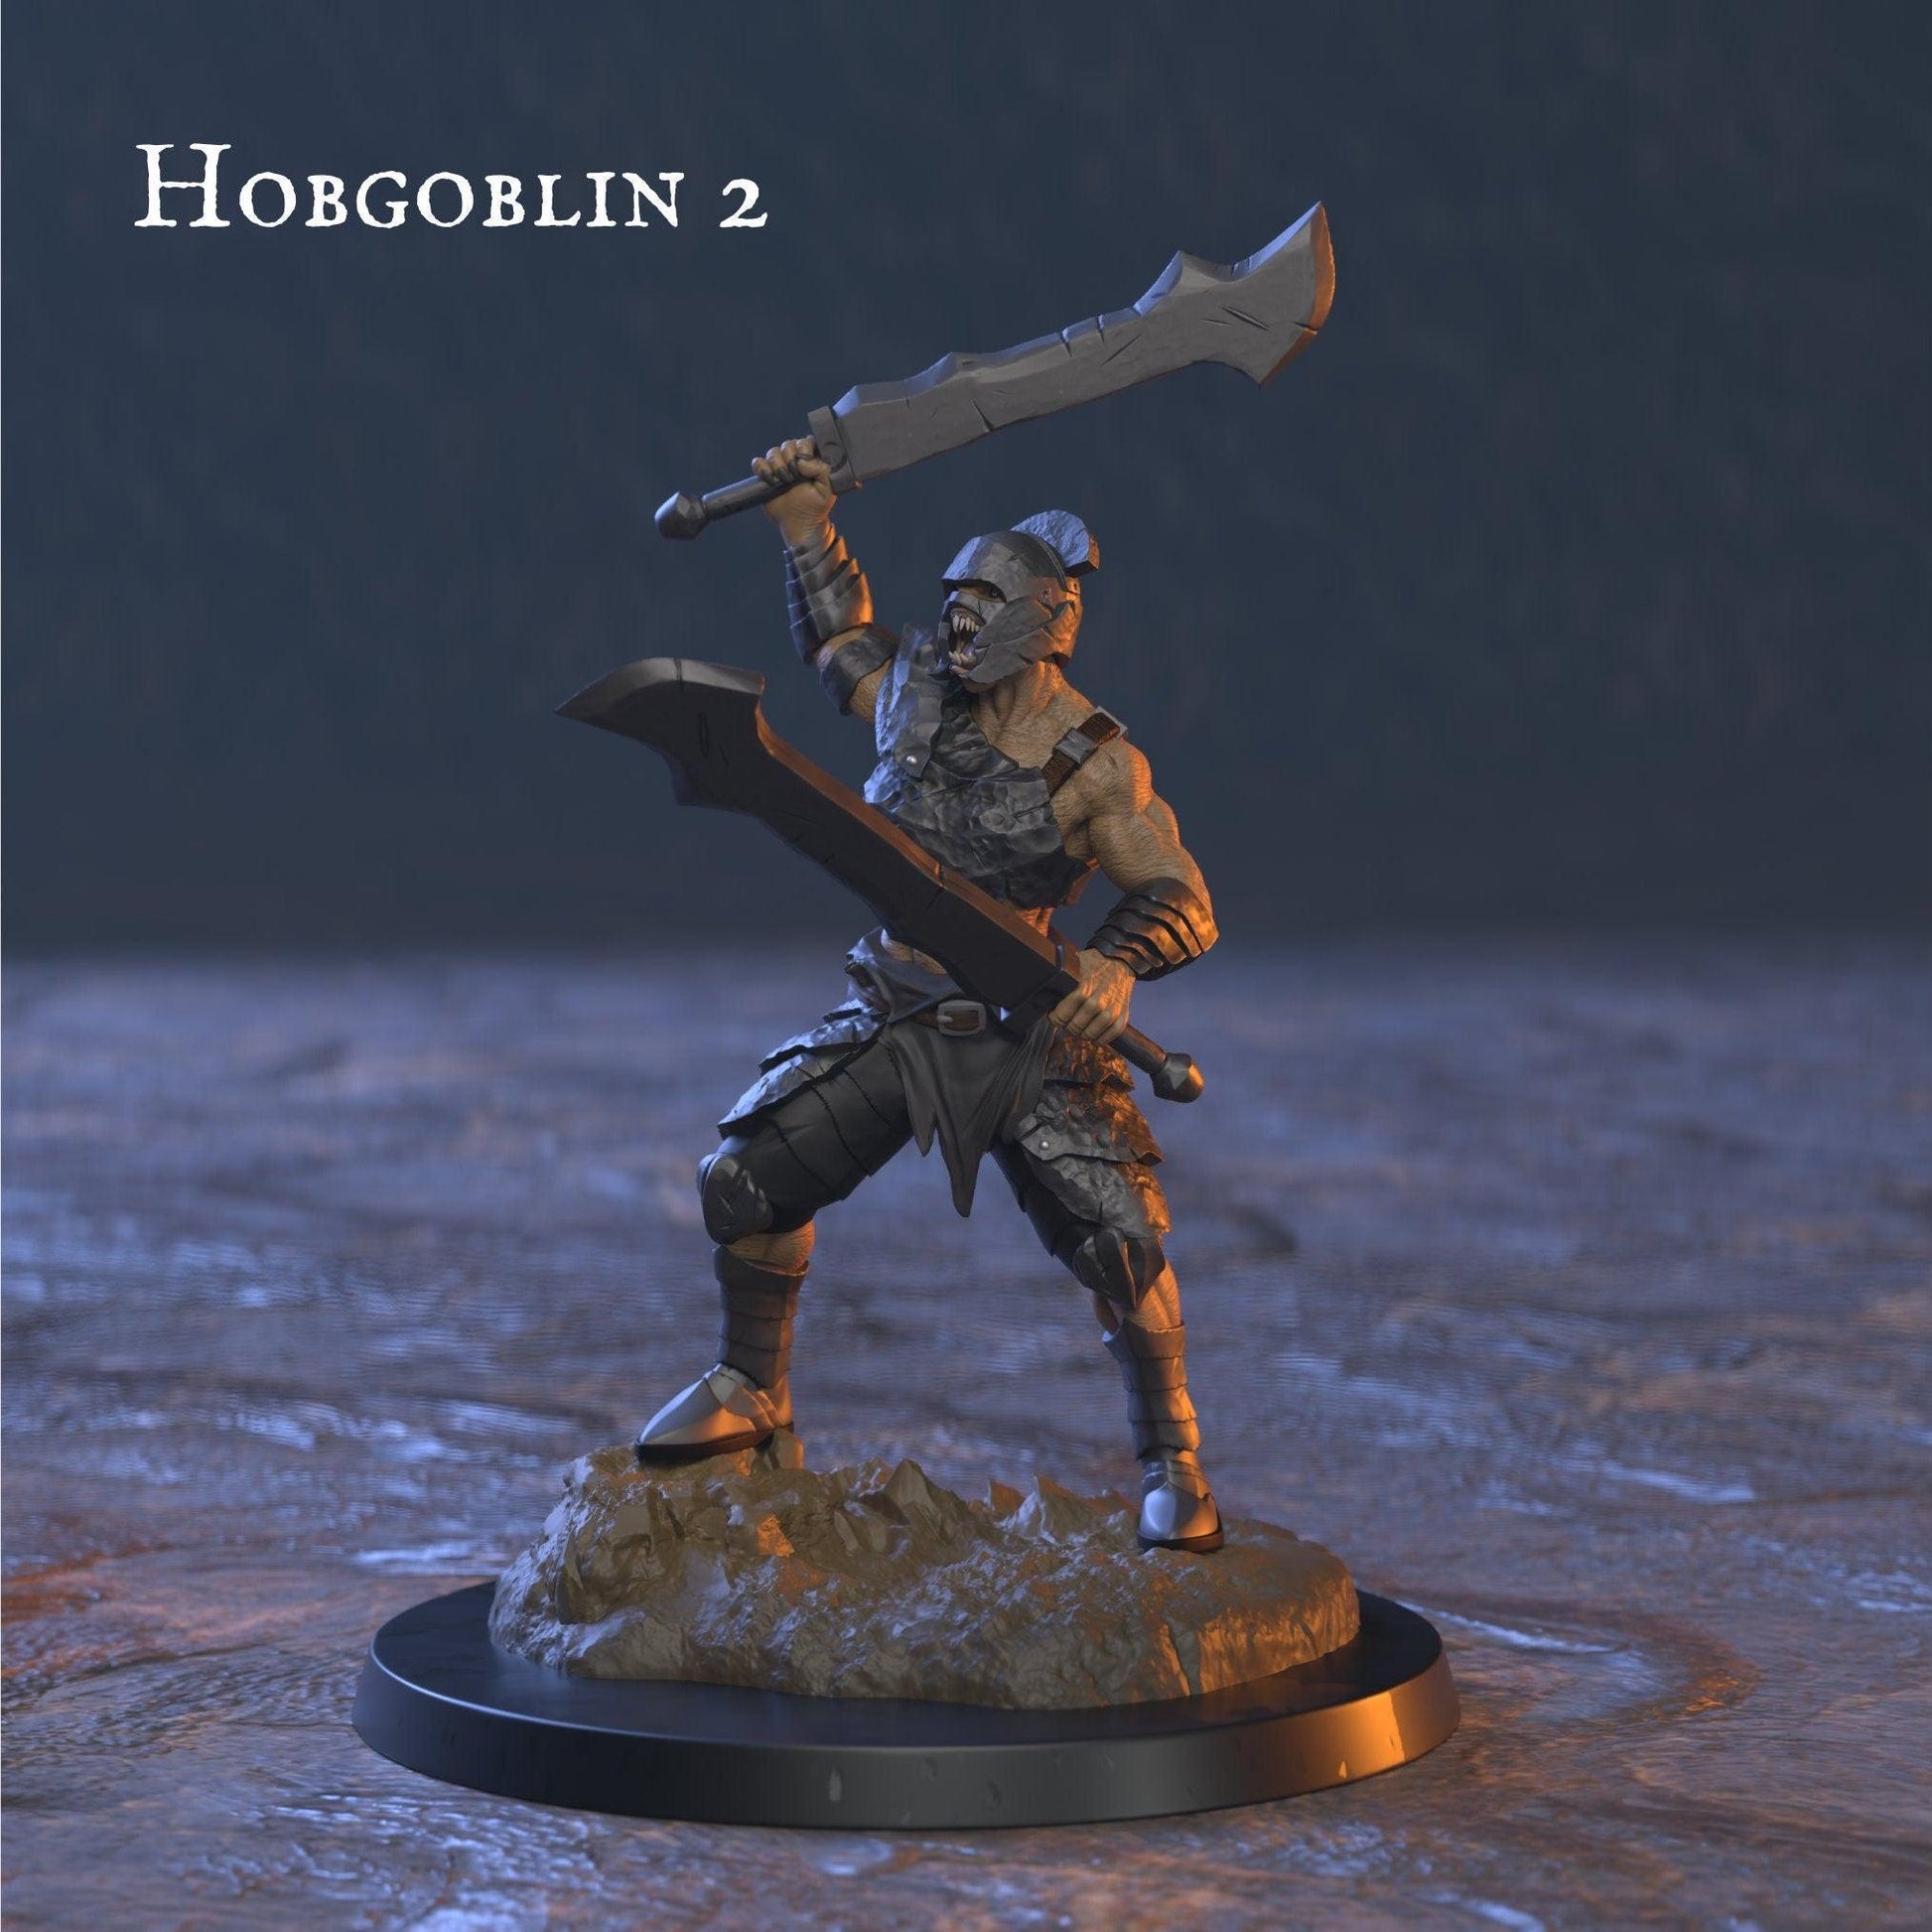 Hobgoblin Miniature: A Fearsome Goblin Figurine for Fantasy Adventures | 32mm Scale - Plague Miniatures shop for DnD Miniatures